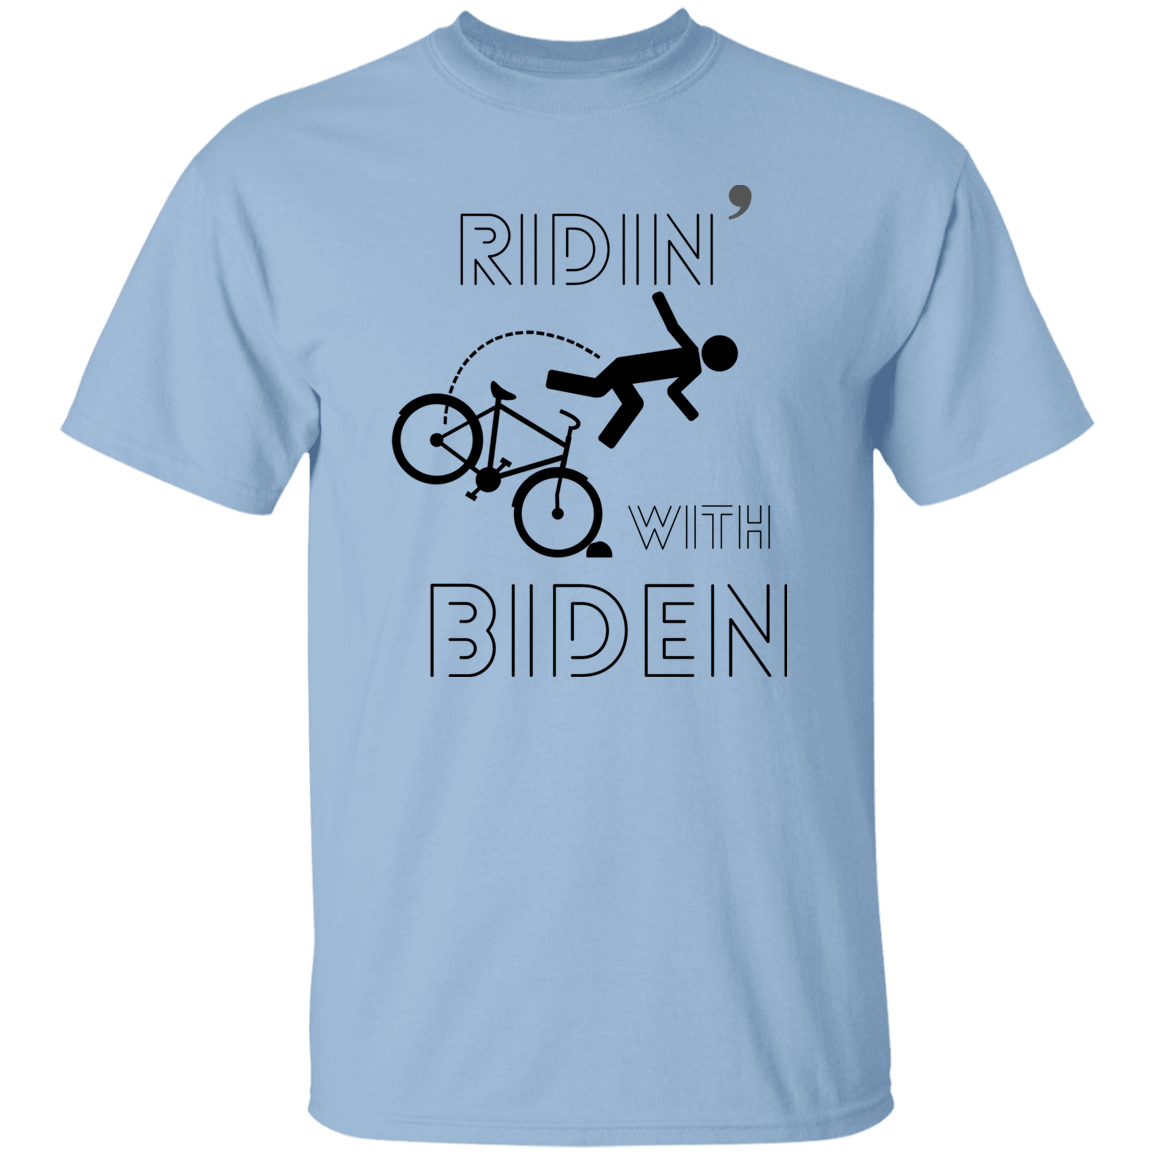 RIDIN' WITH BIDEN (b) 5.3 oz. T-Shirt